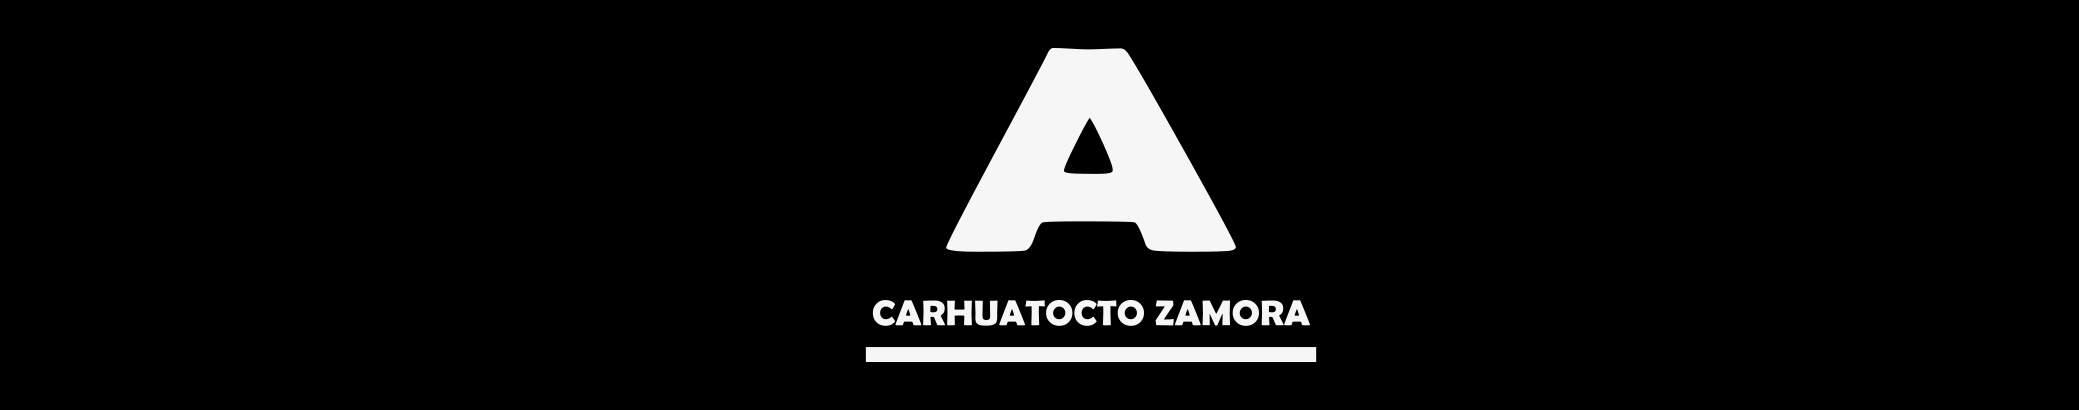 Alonso Carhuatocto zamora's profile banner